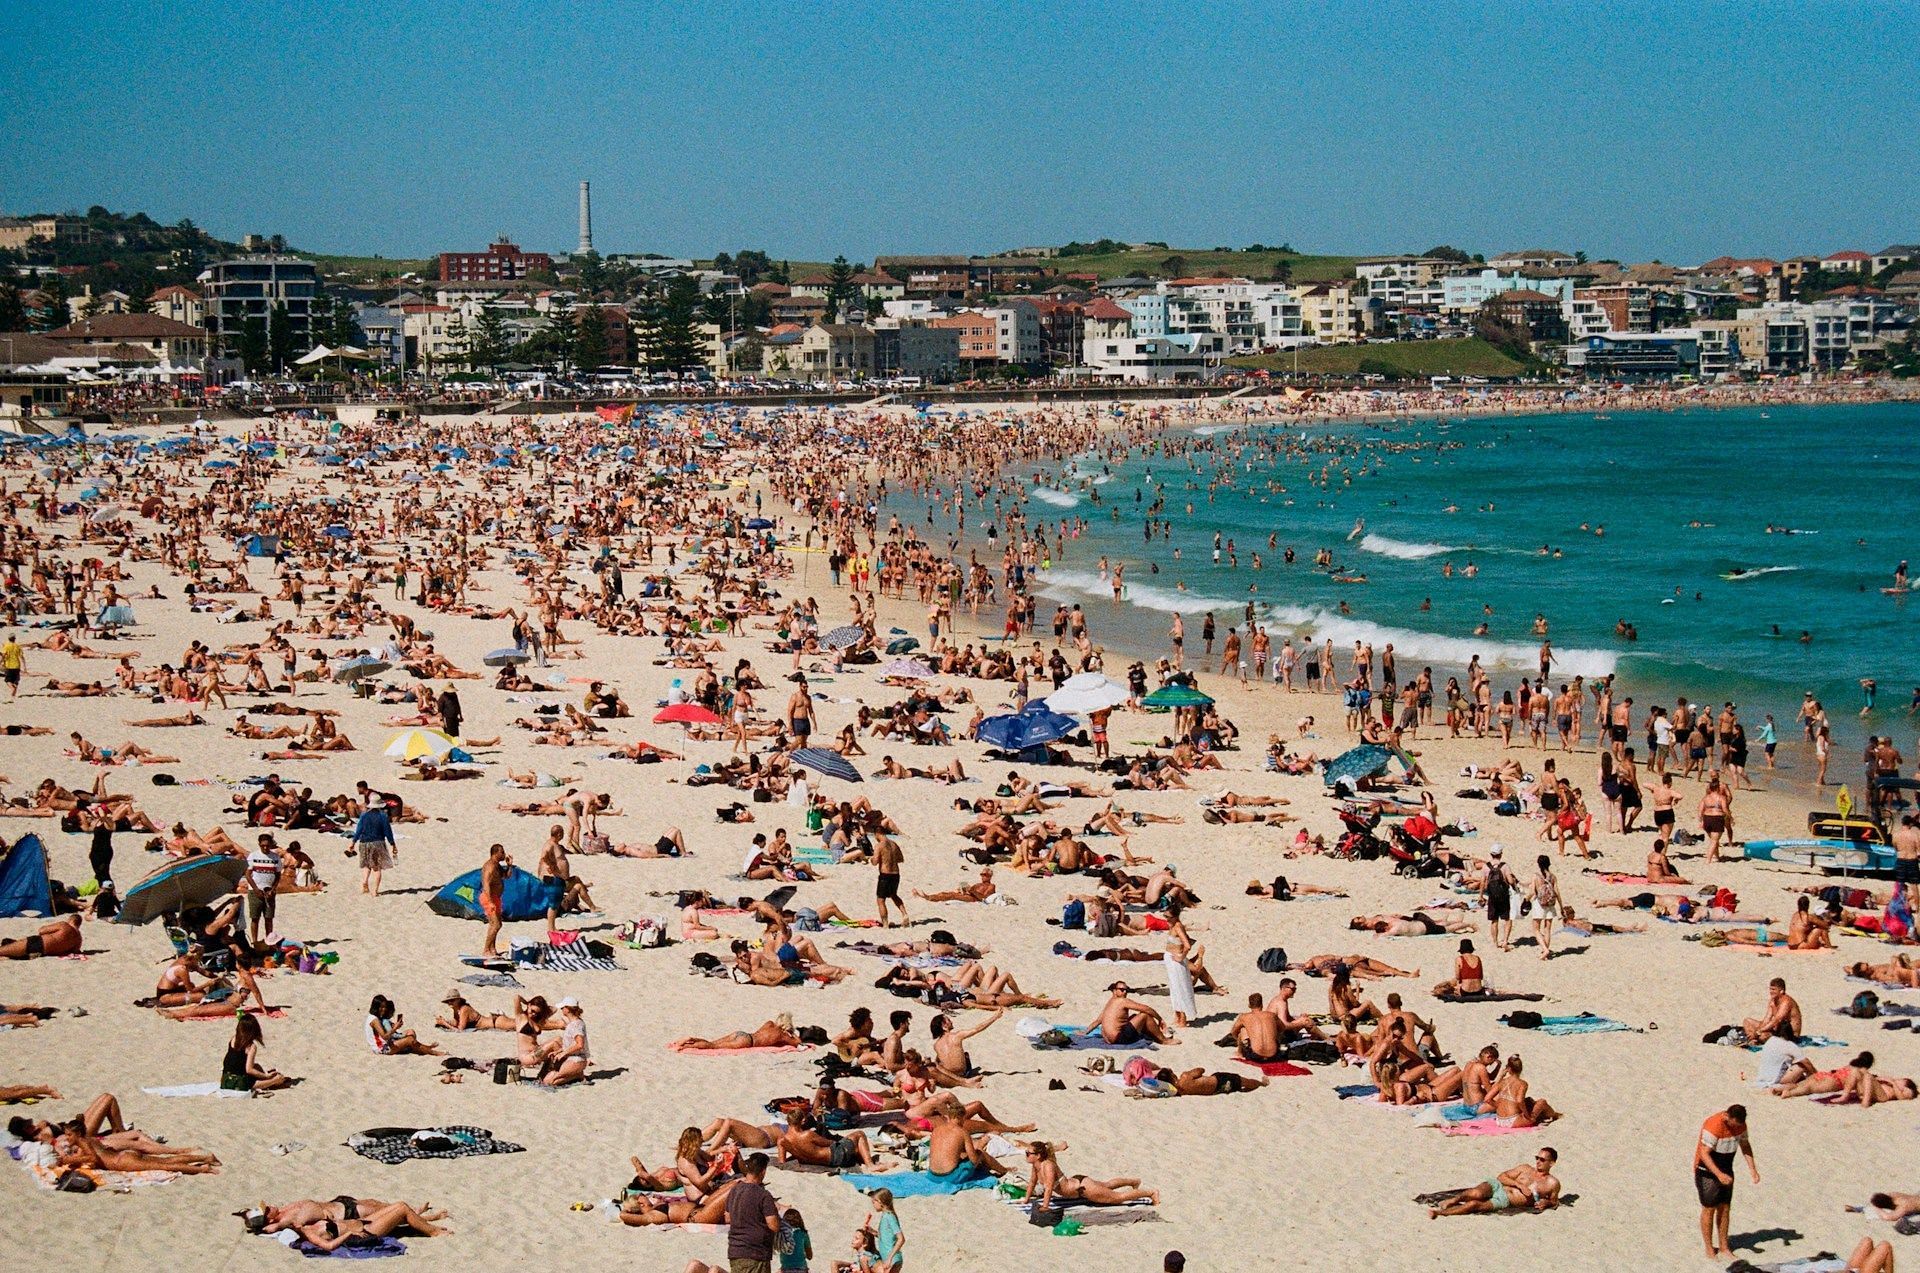 A representative image of a crowded beach. (Image via Unsplash)